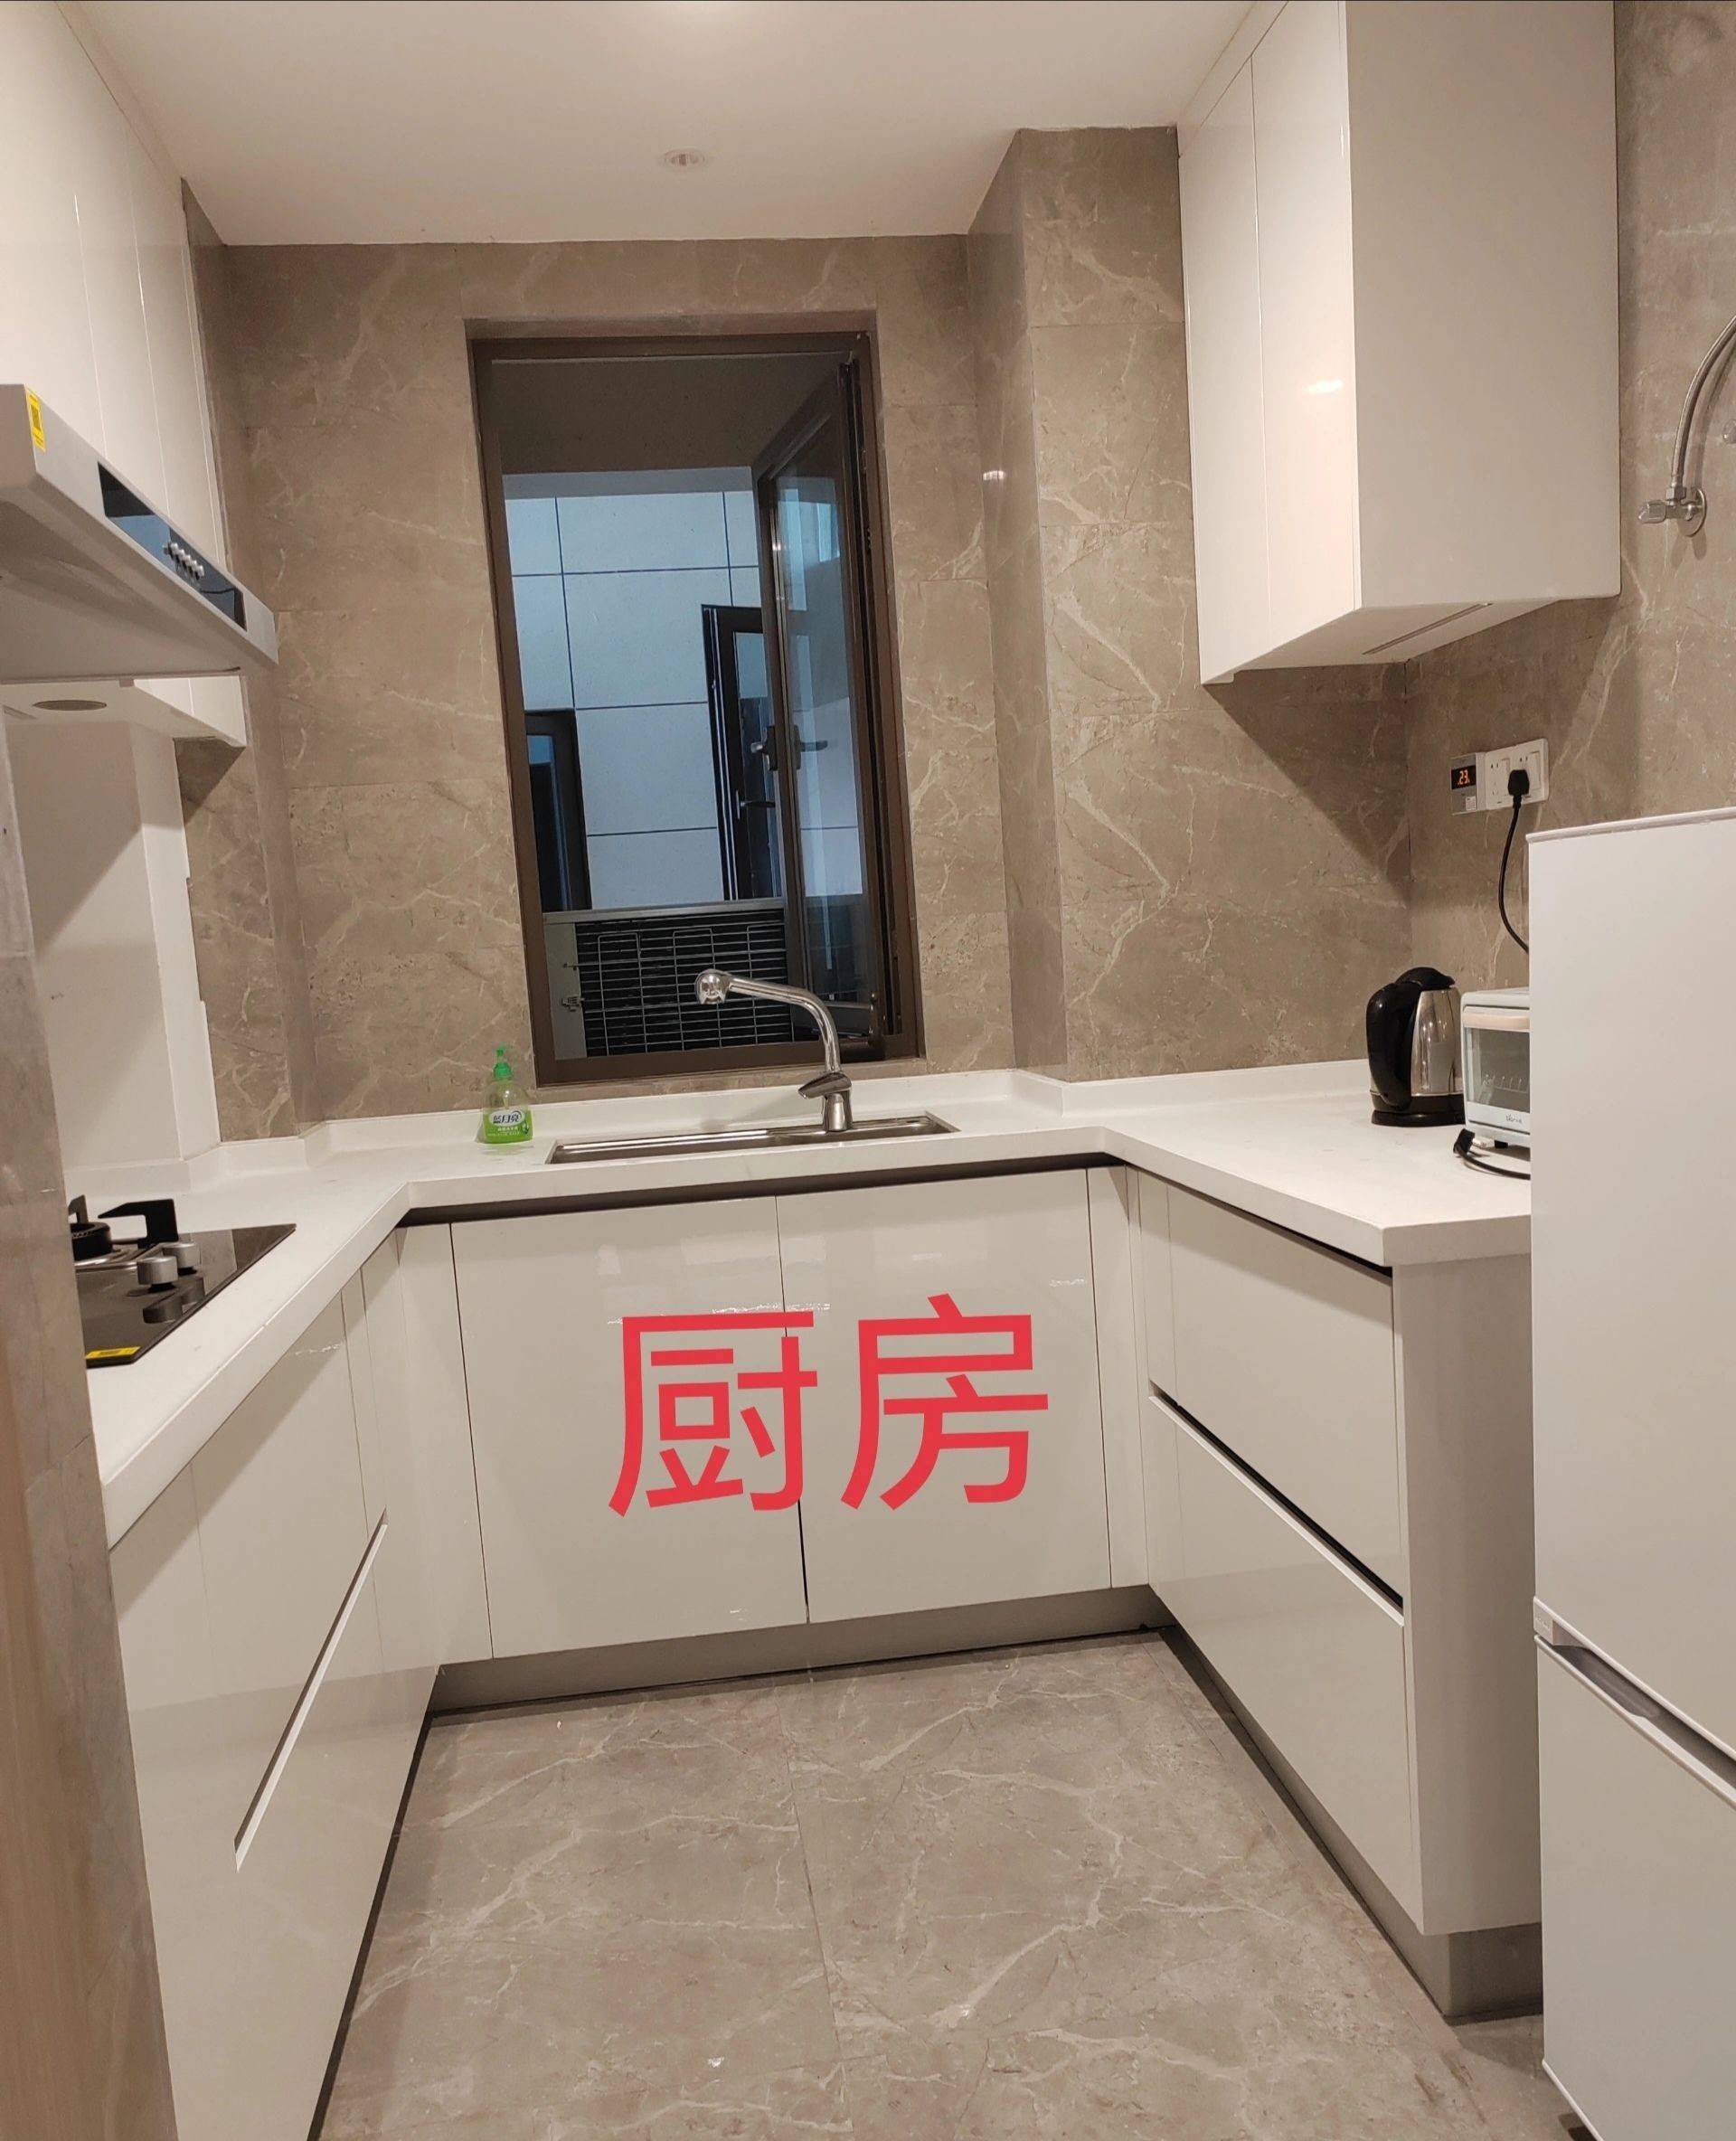 Hangzhou-Xiaoshan-Cozy Home,Clean&Comfy,No Gender Limit,Hustle & Bustle